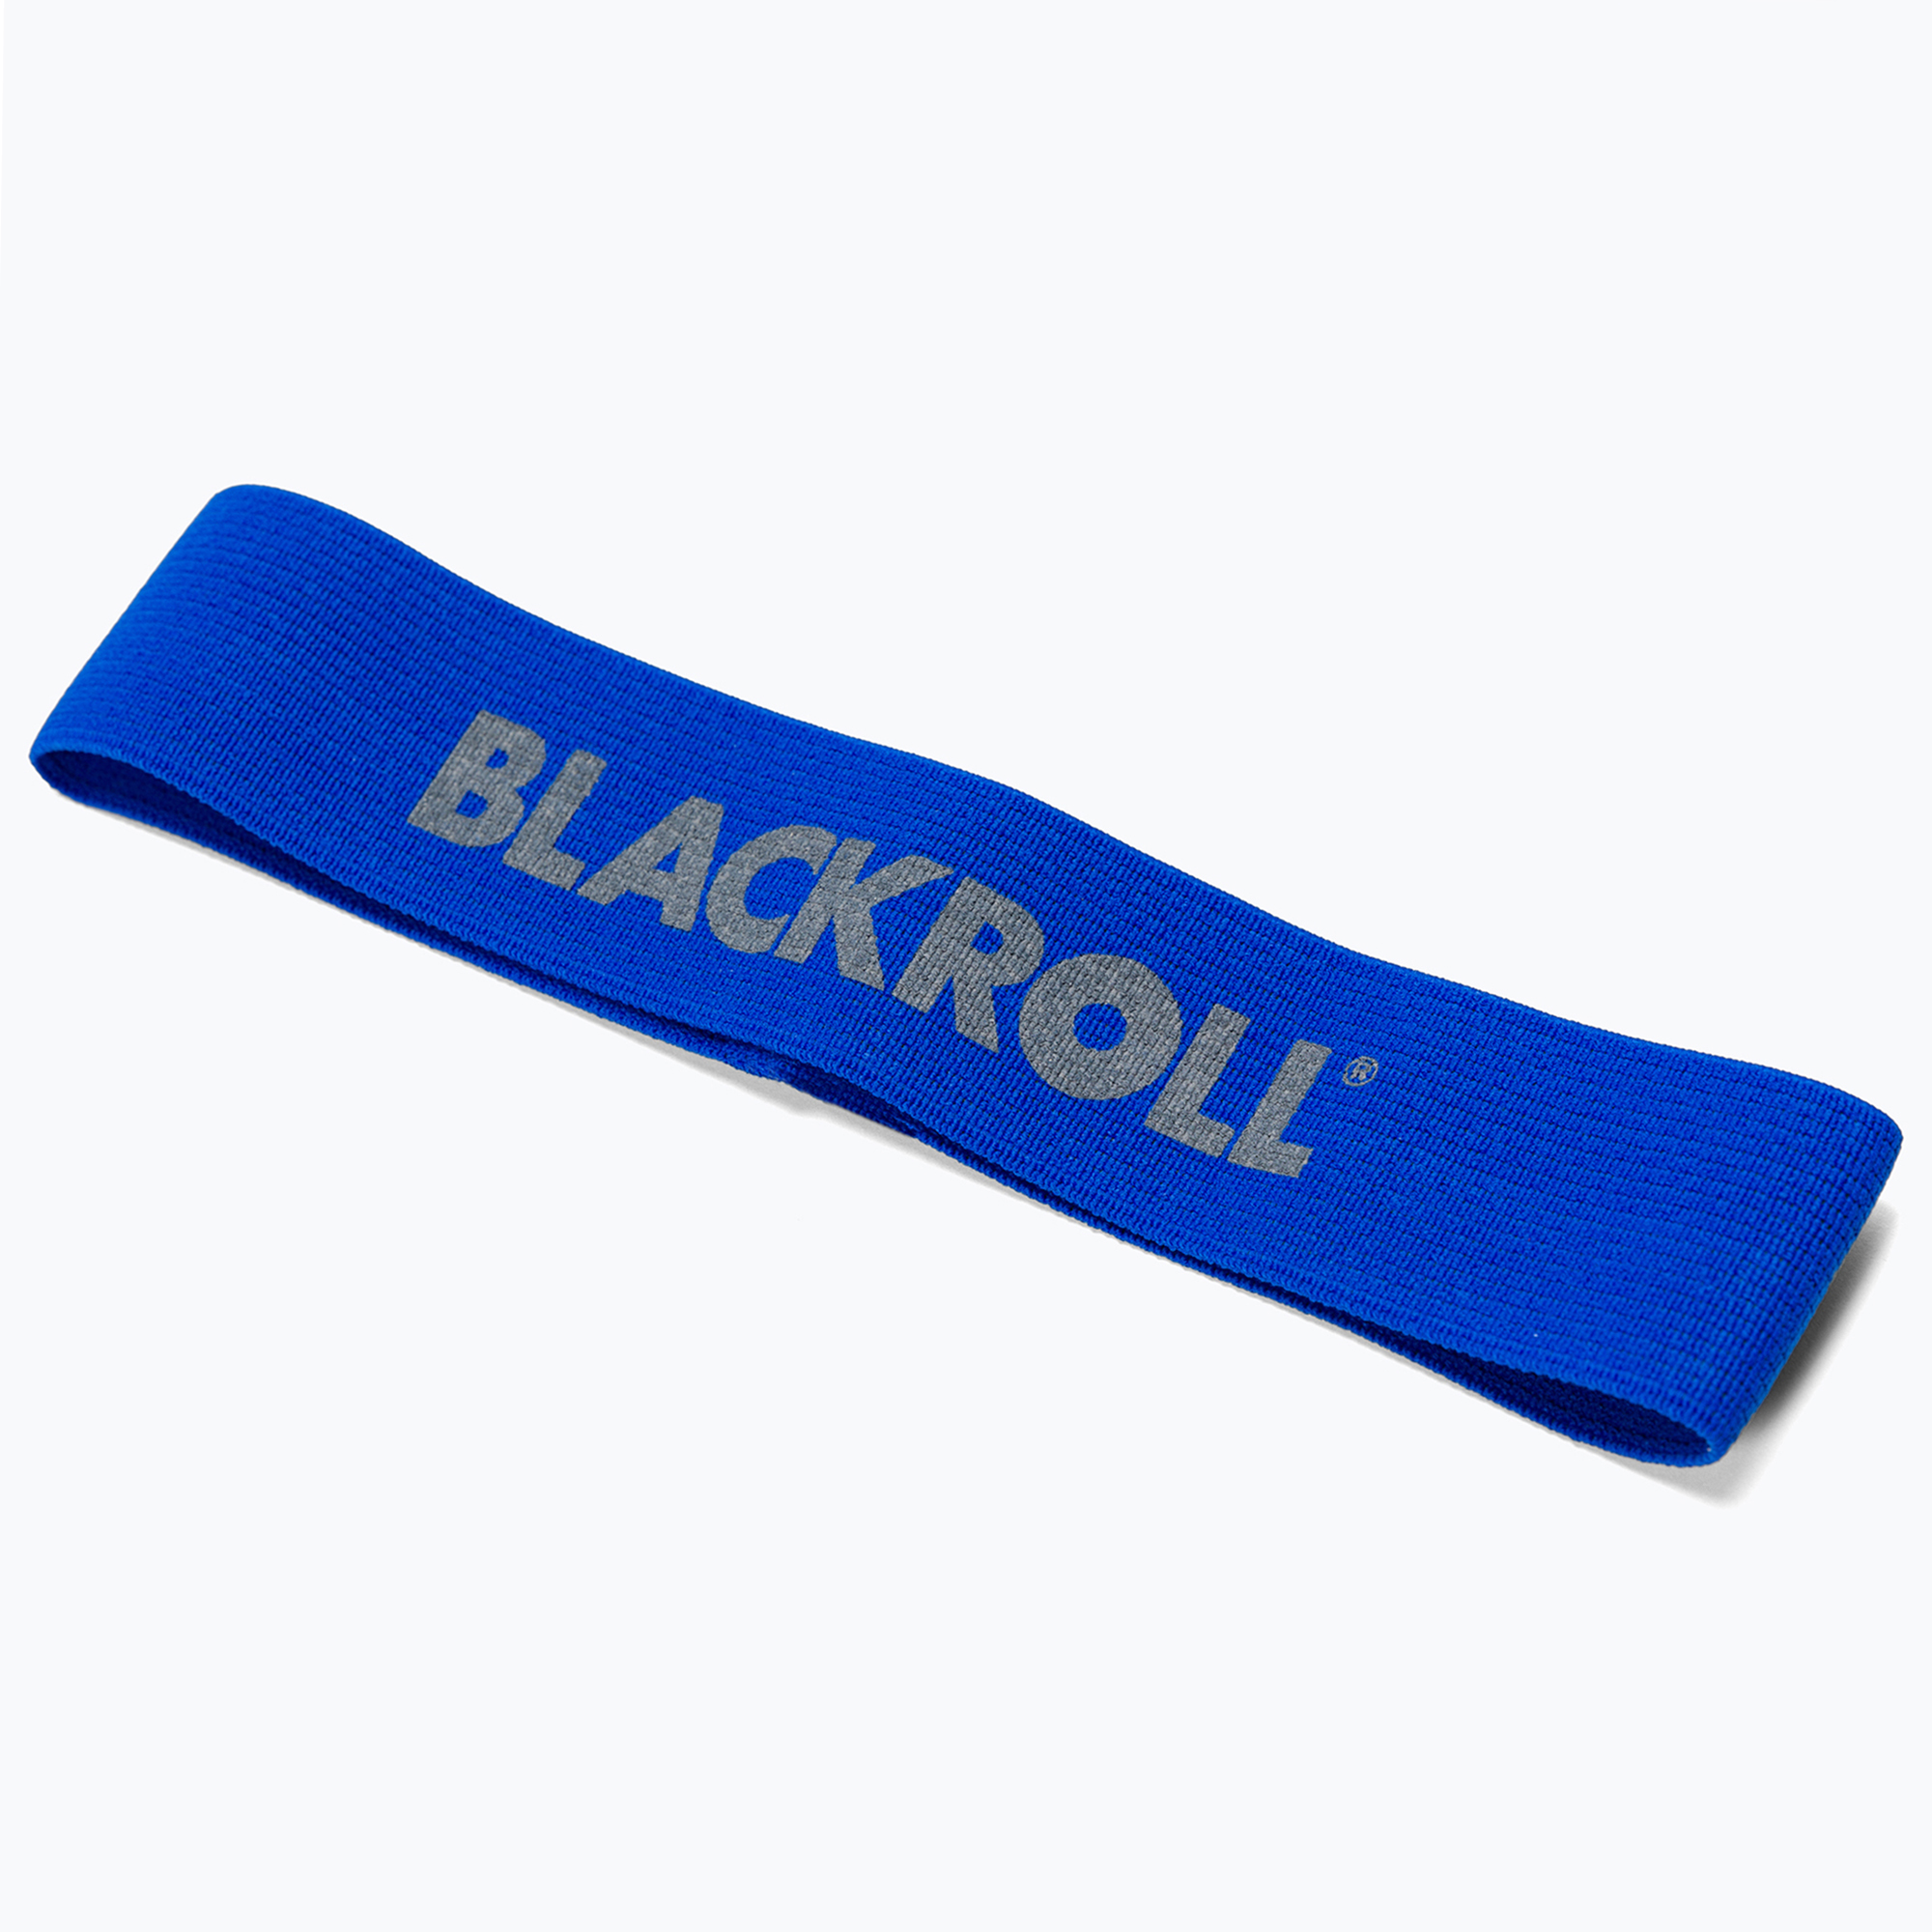 BLACKROLL Slučka modrá fitness gumička42603